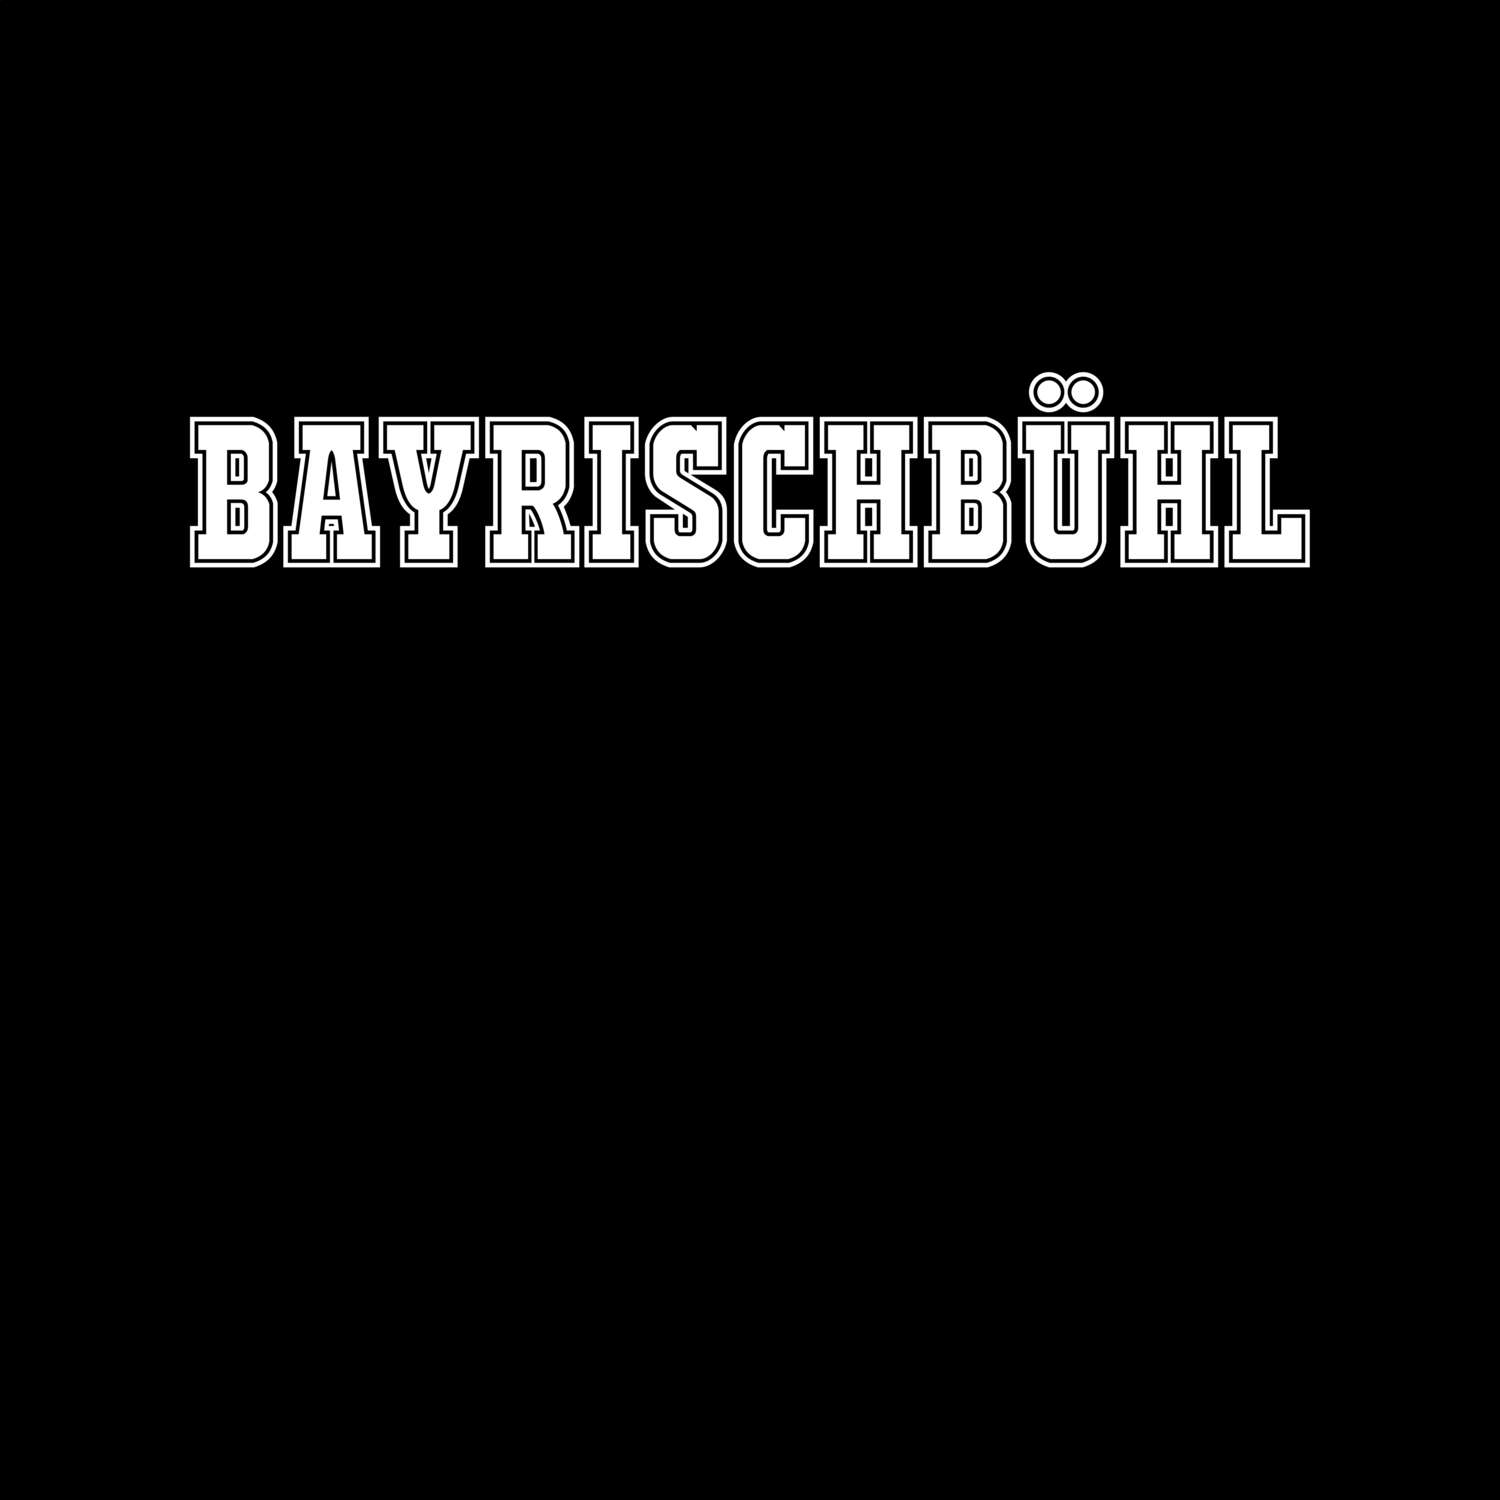 Bayrischbühl T-Shirt »Classic«